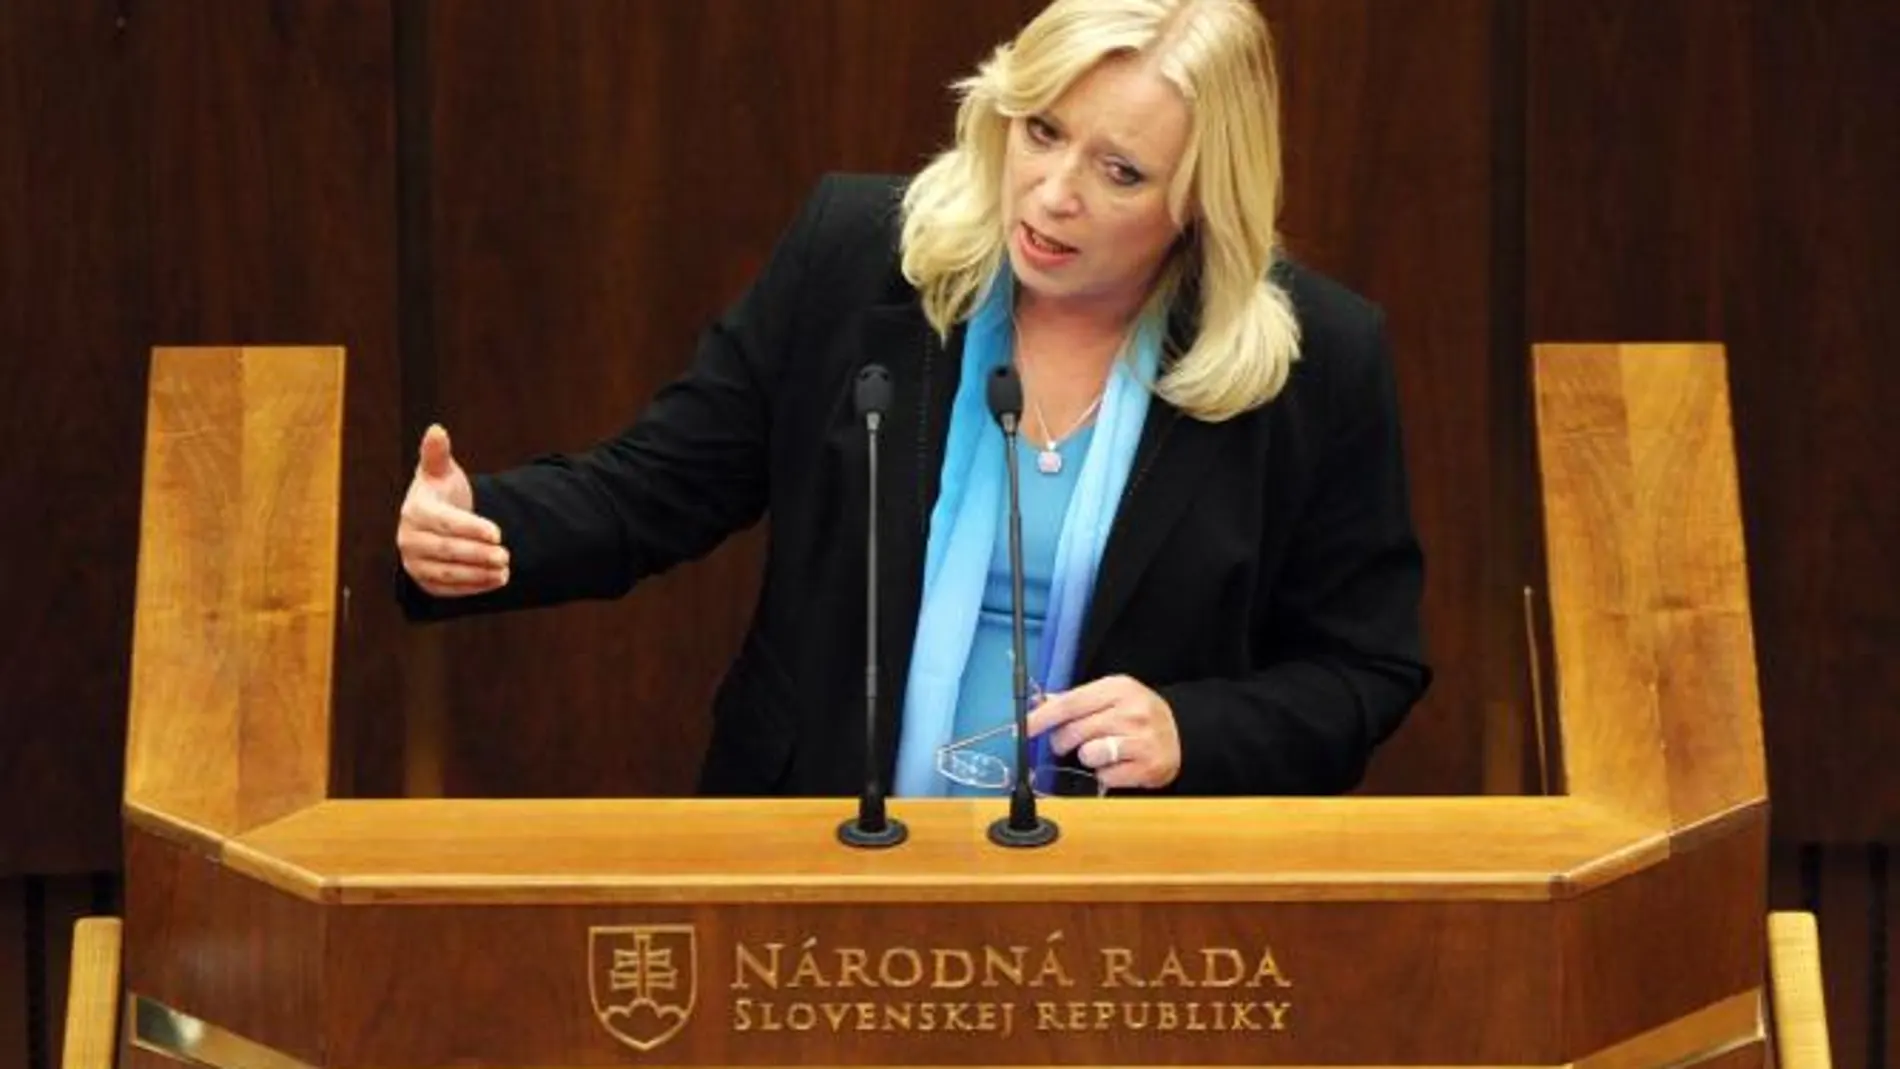 La primera ministra eslovaca Iveta Radicova interviene durante la sesión parlamentaria